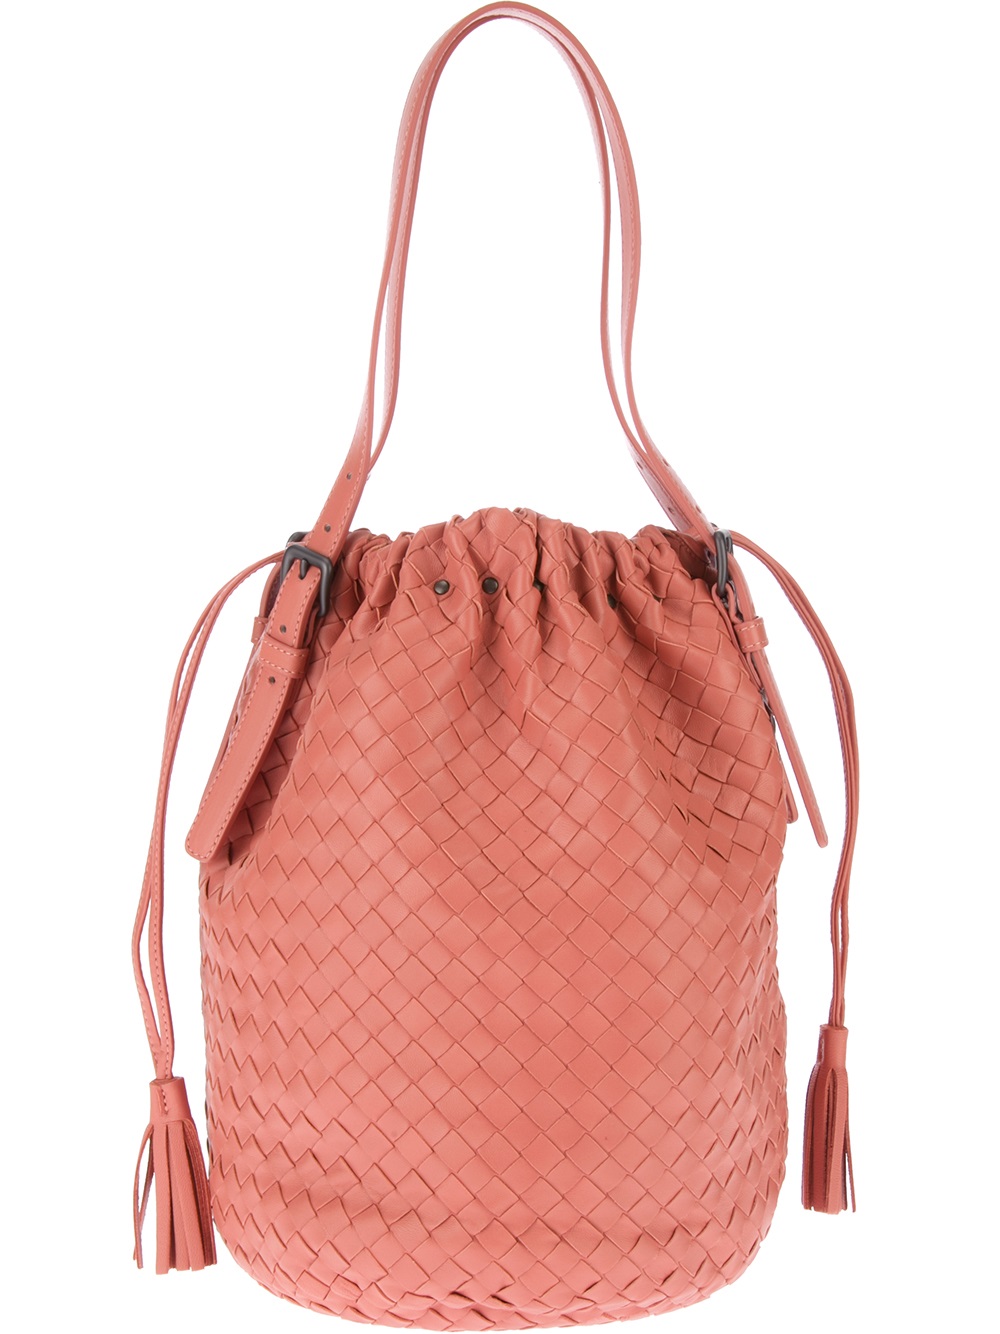 Lyst - Bottega Veneta Drawstring Shoulder Bag in Pink